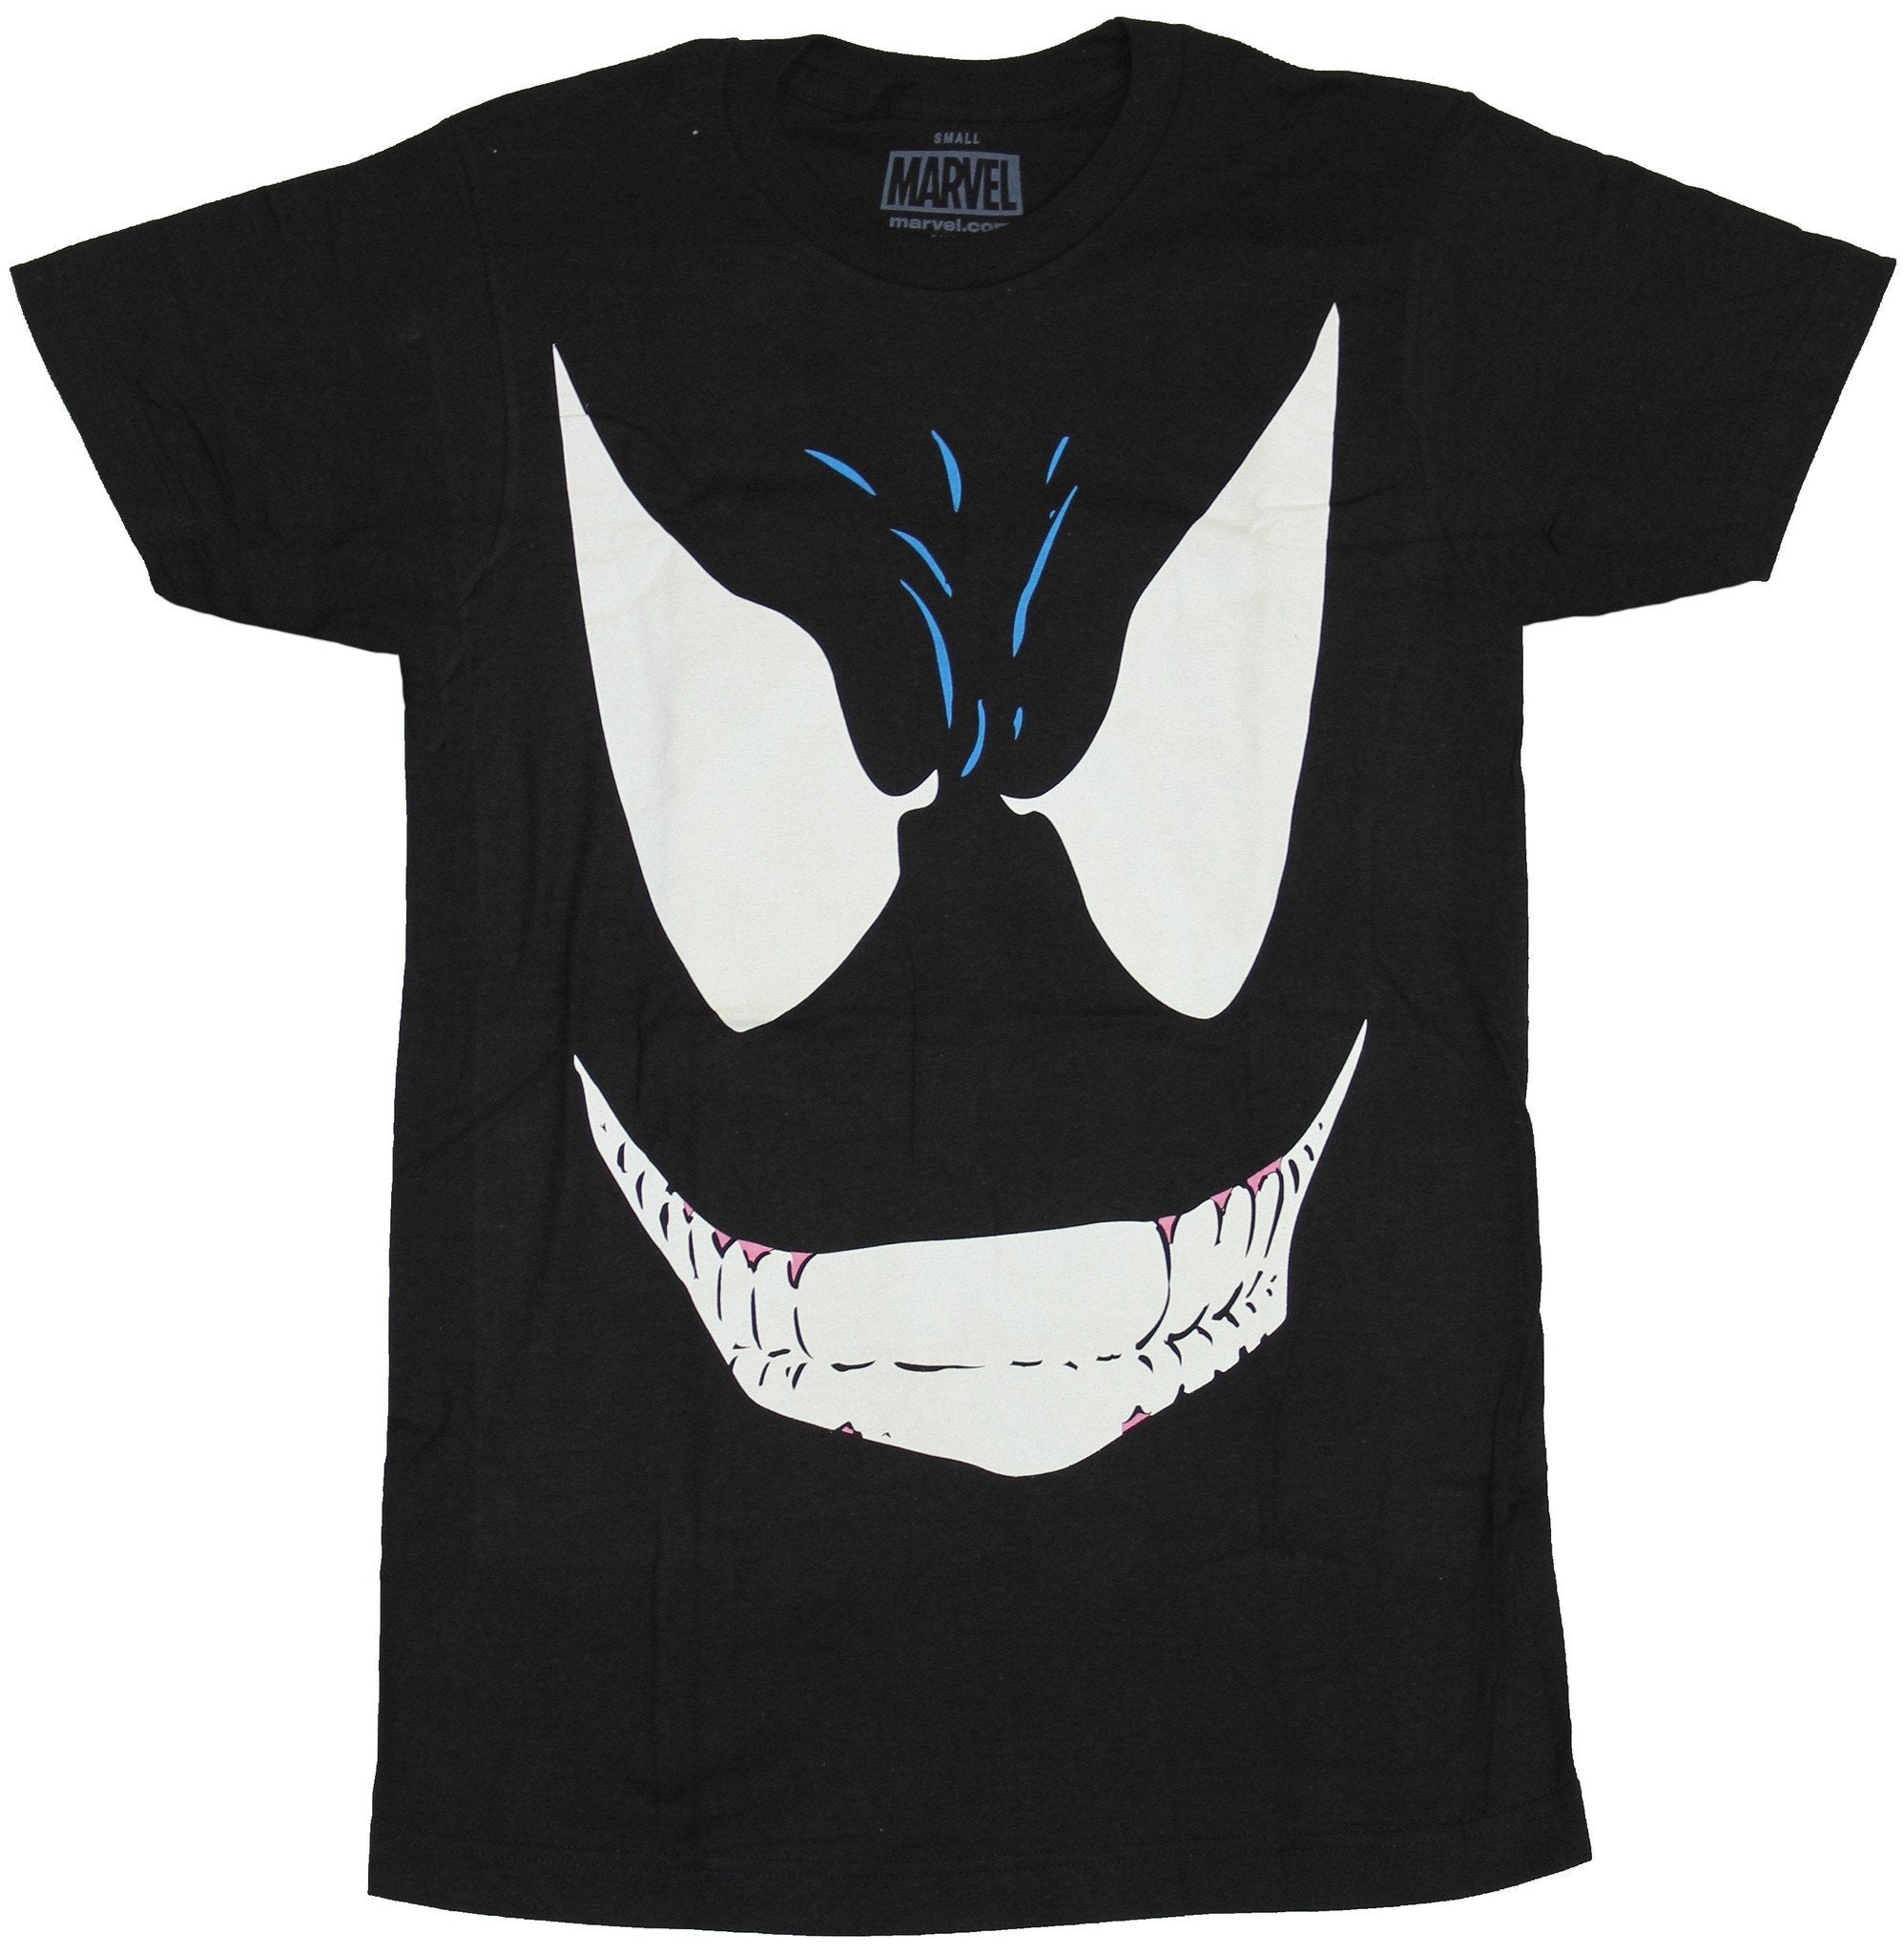 Venom (Marvel Comics) Mens T-Shirt - Giant Big Smiling Venom Face Image